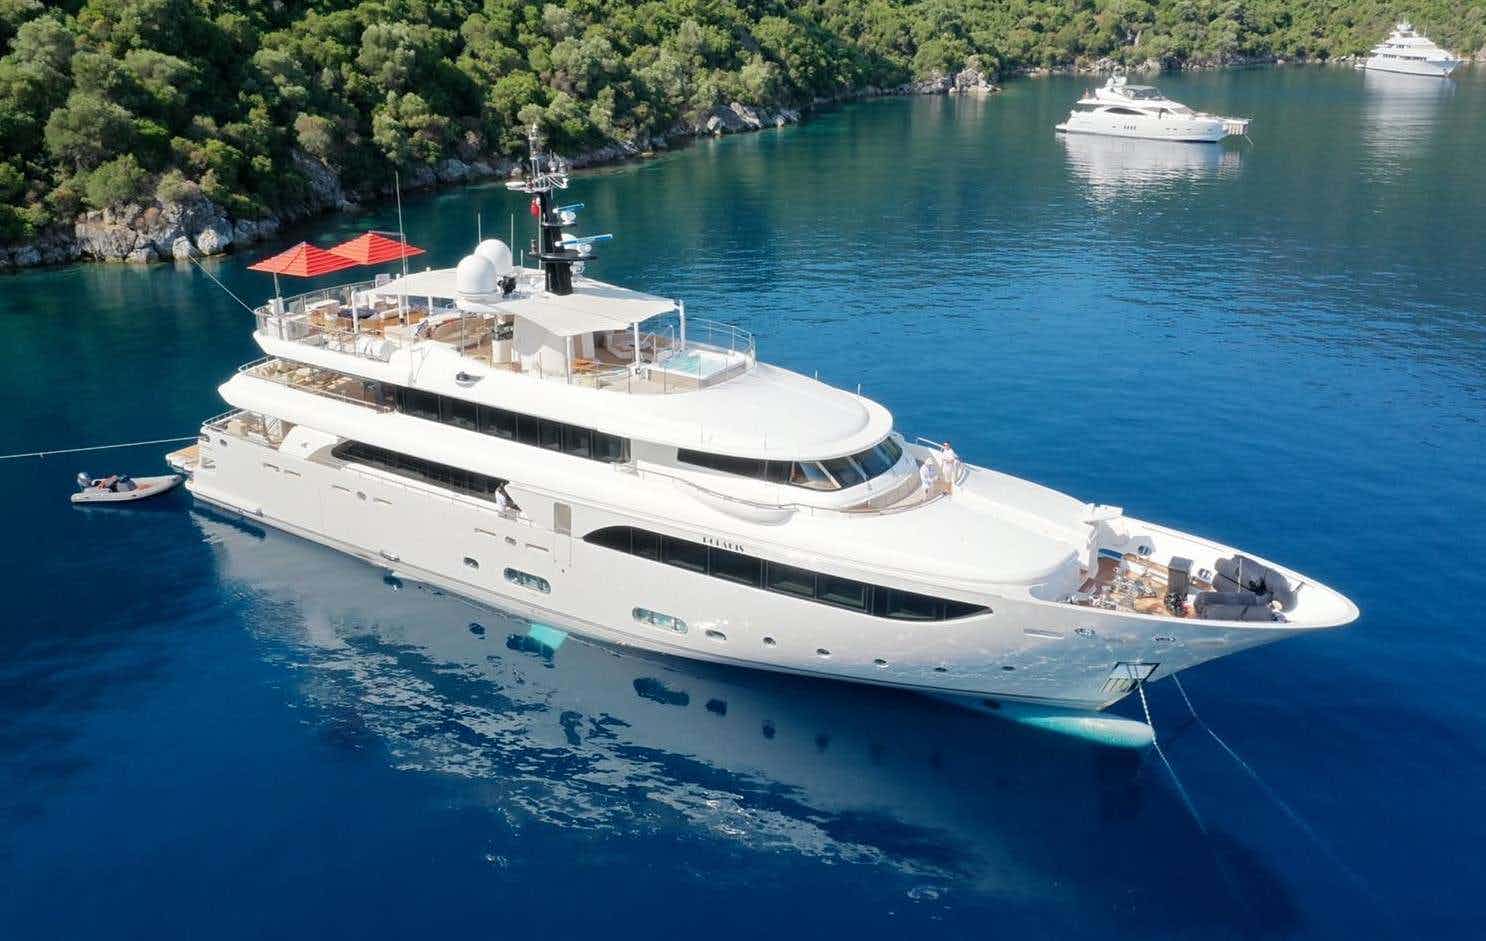 POLARIS - Alimos Yacht Charter & Boat hire in Croatia, Greece, Turkey 1